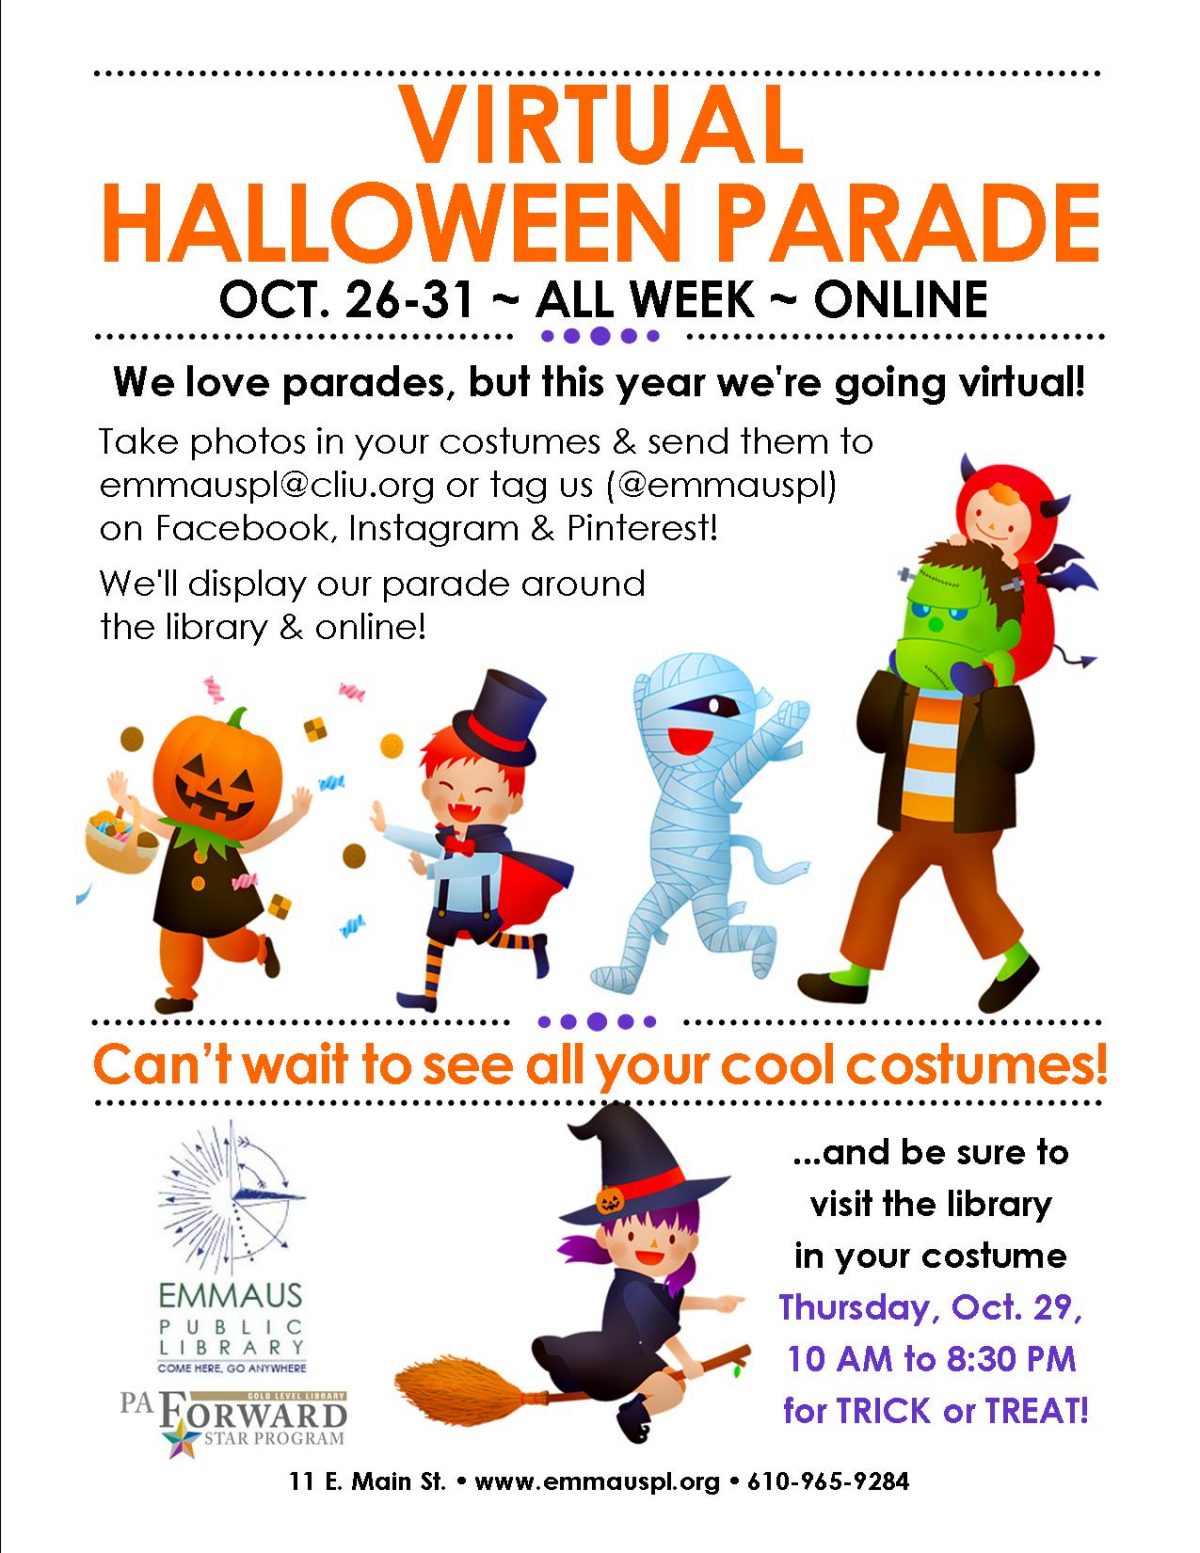 ONLINE Virtual Halloween Parade! Emmaus Public Library